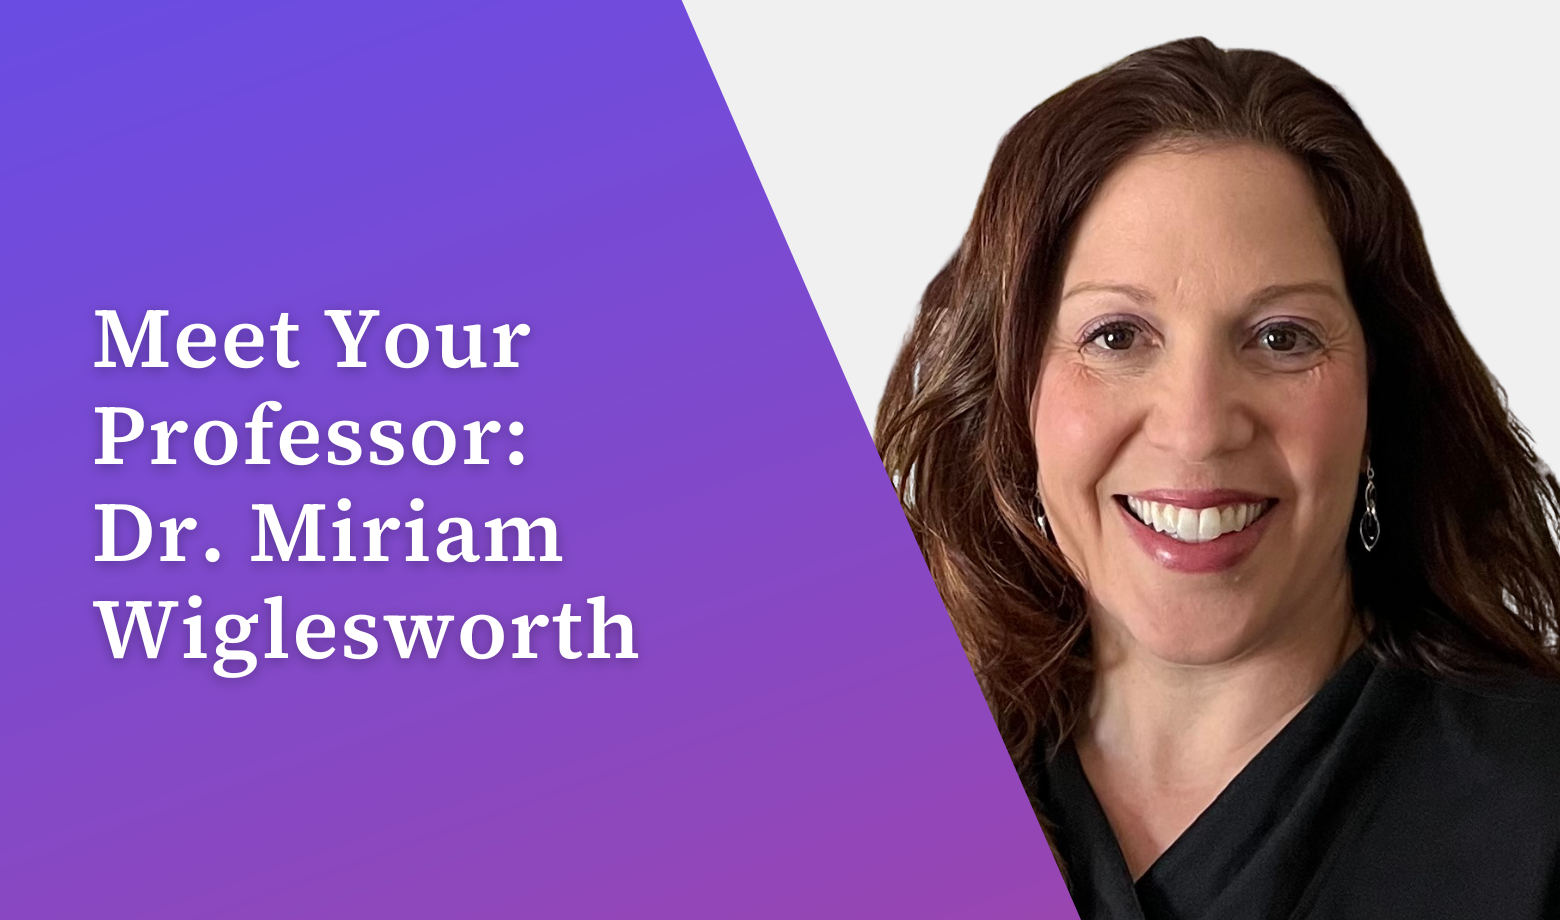 Meet Your Professor: Dr. Miriam Wiglesworth